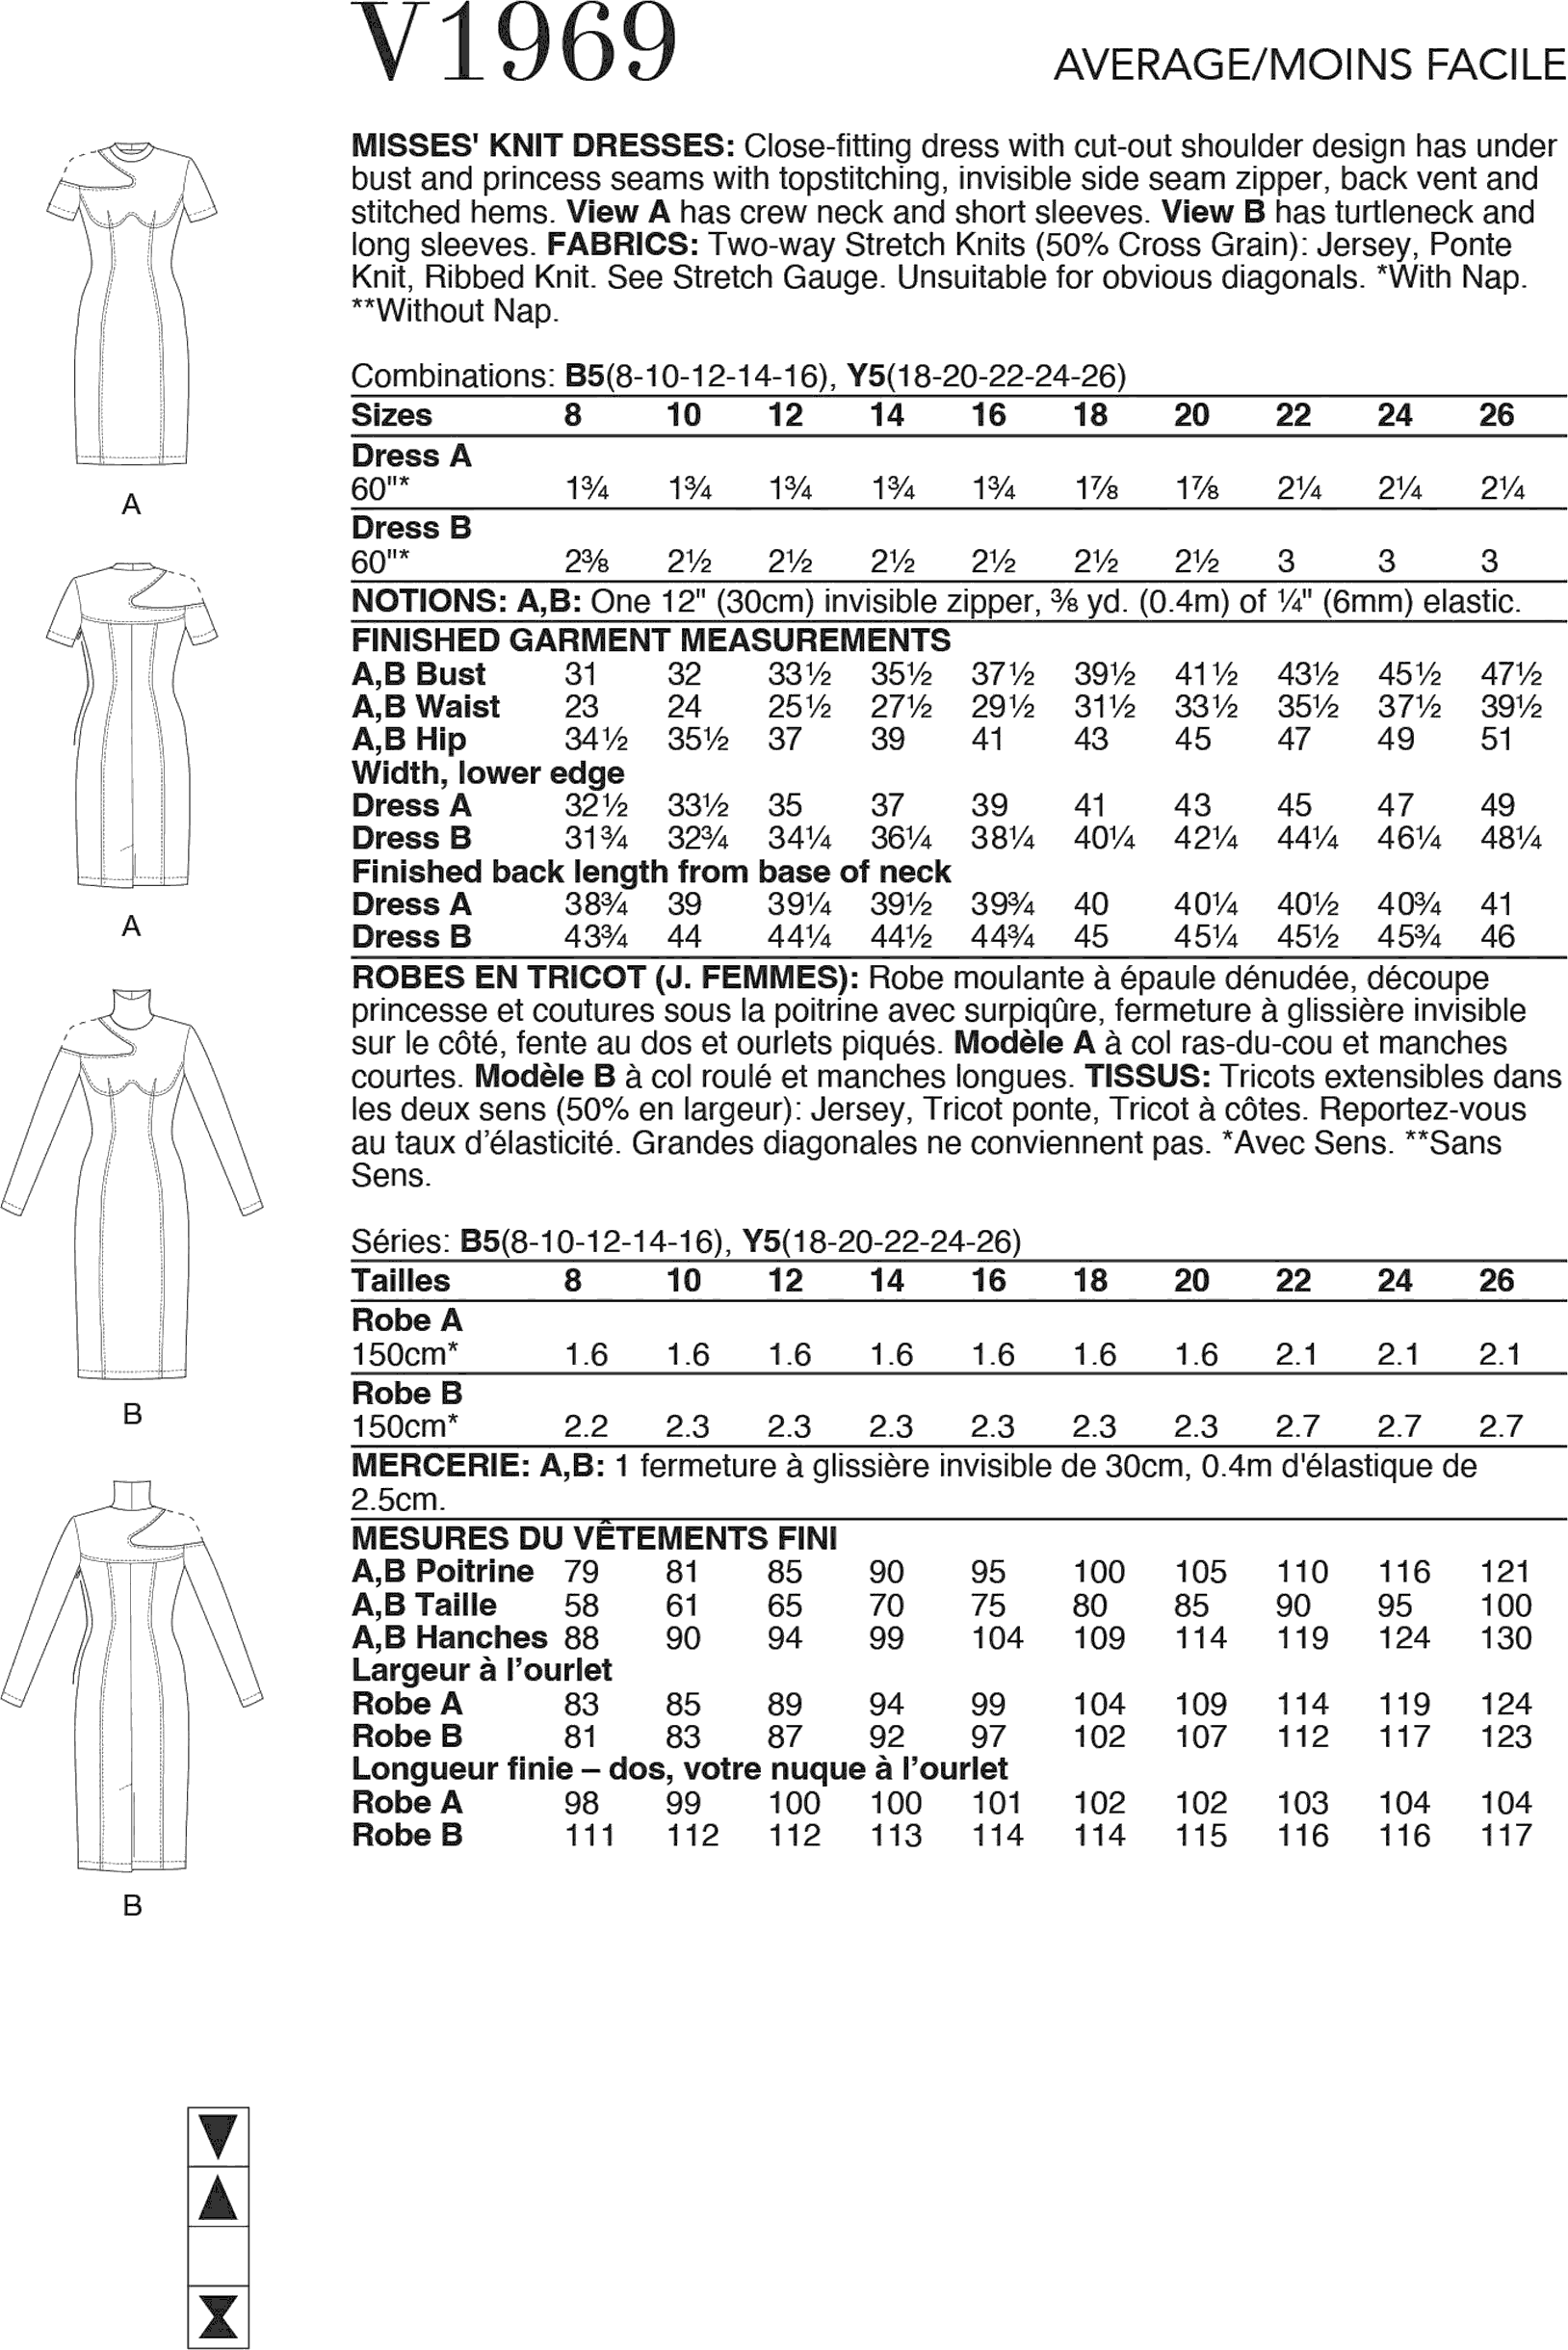 Vogue Pattern V1969 Misses Knit Dresses 1969 Fabric Quantity Requirements From Patternsandplains.com